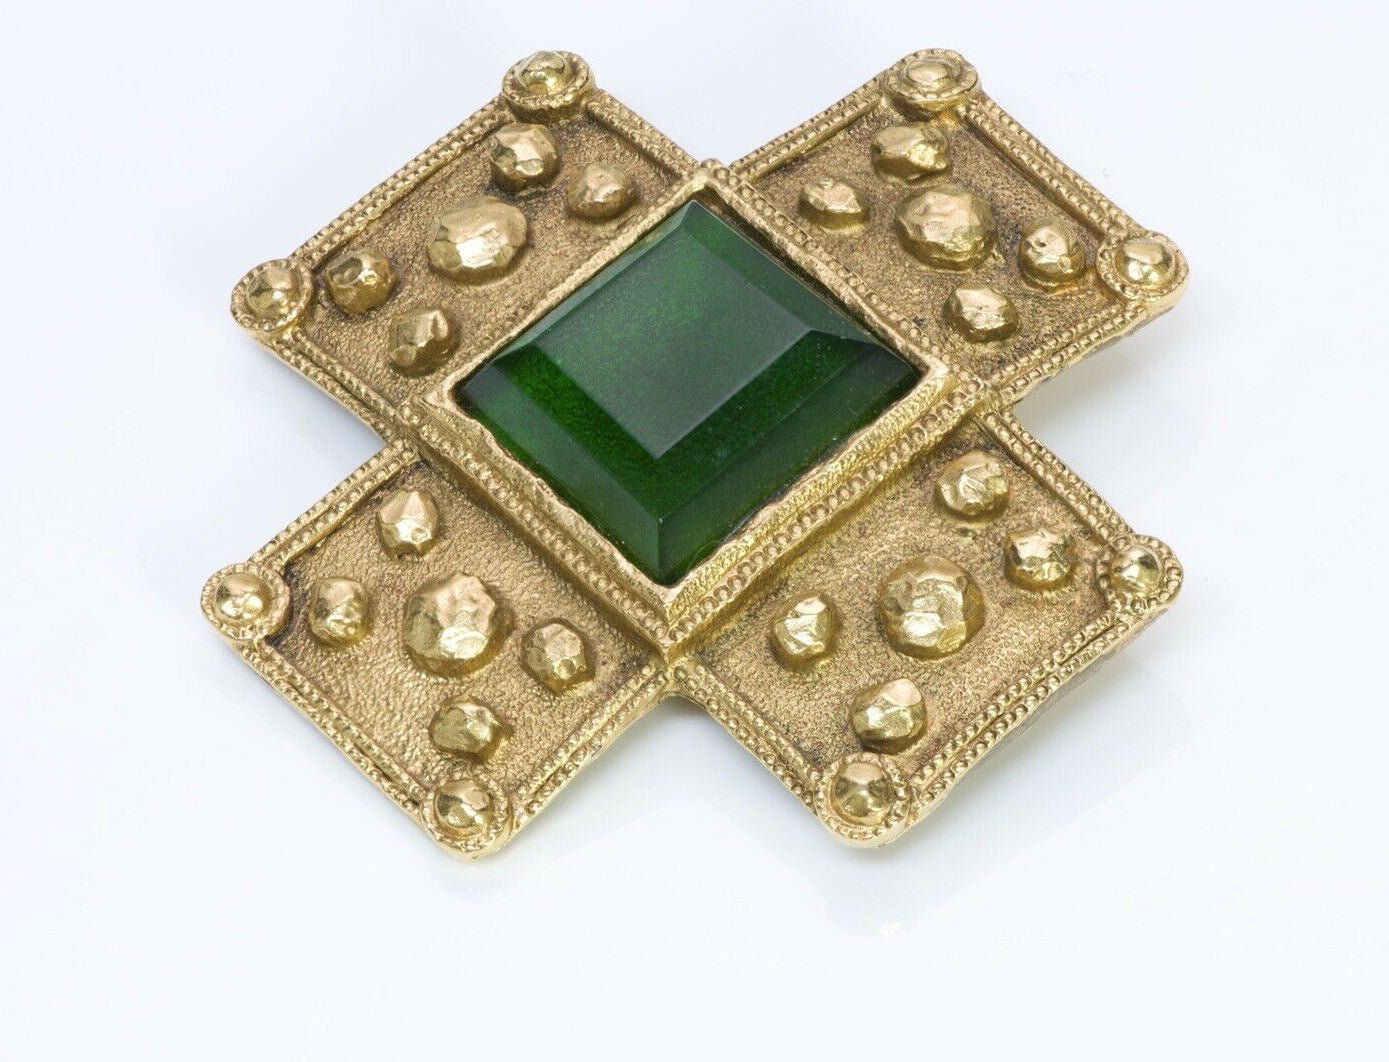 CHANEL Paris Goossens Byzantine Style Green Cross Brooch